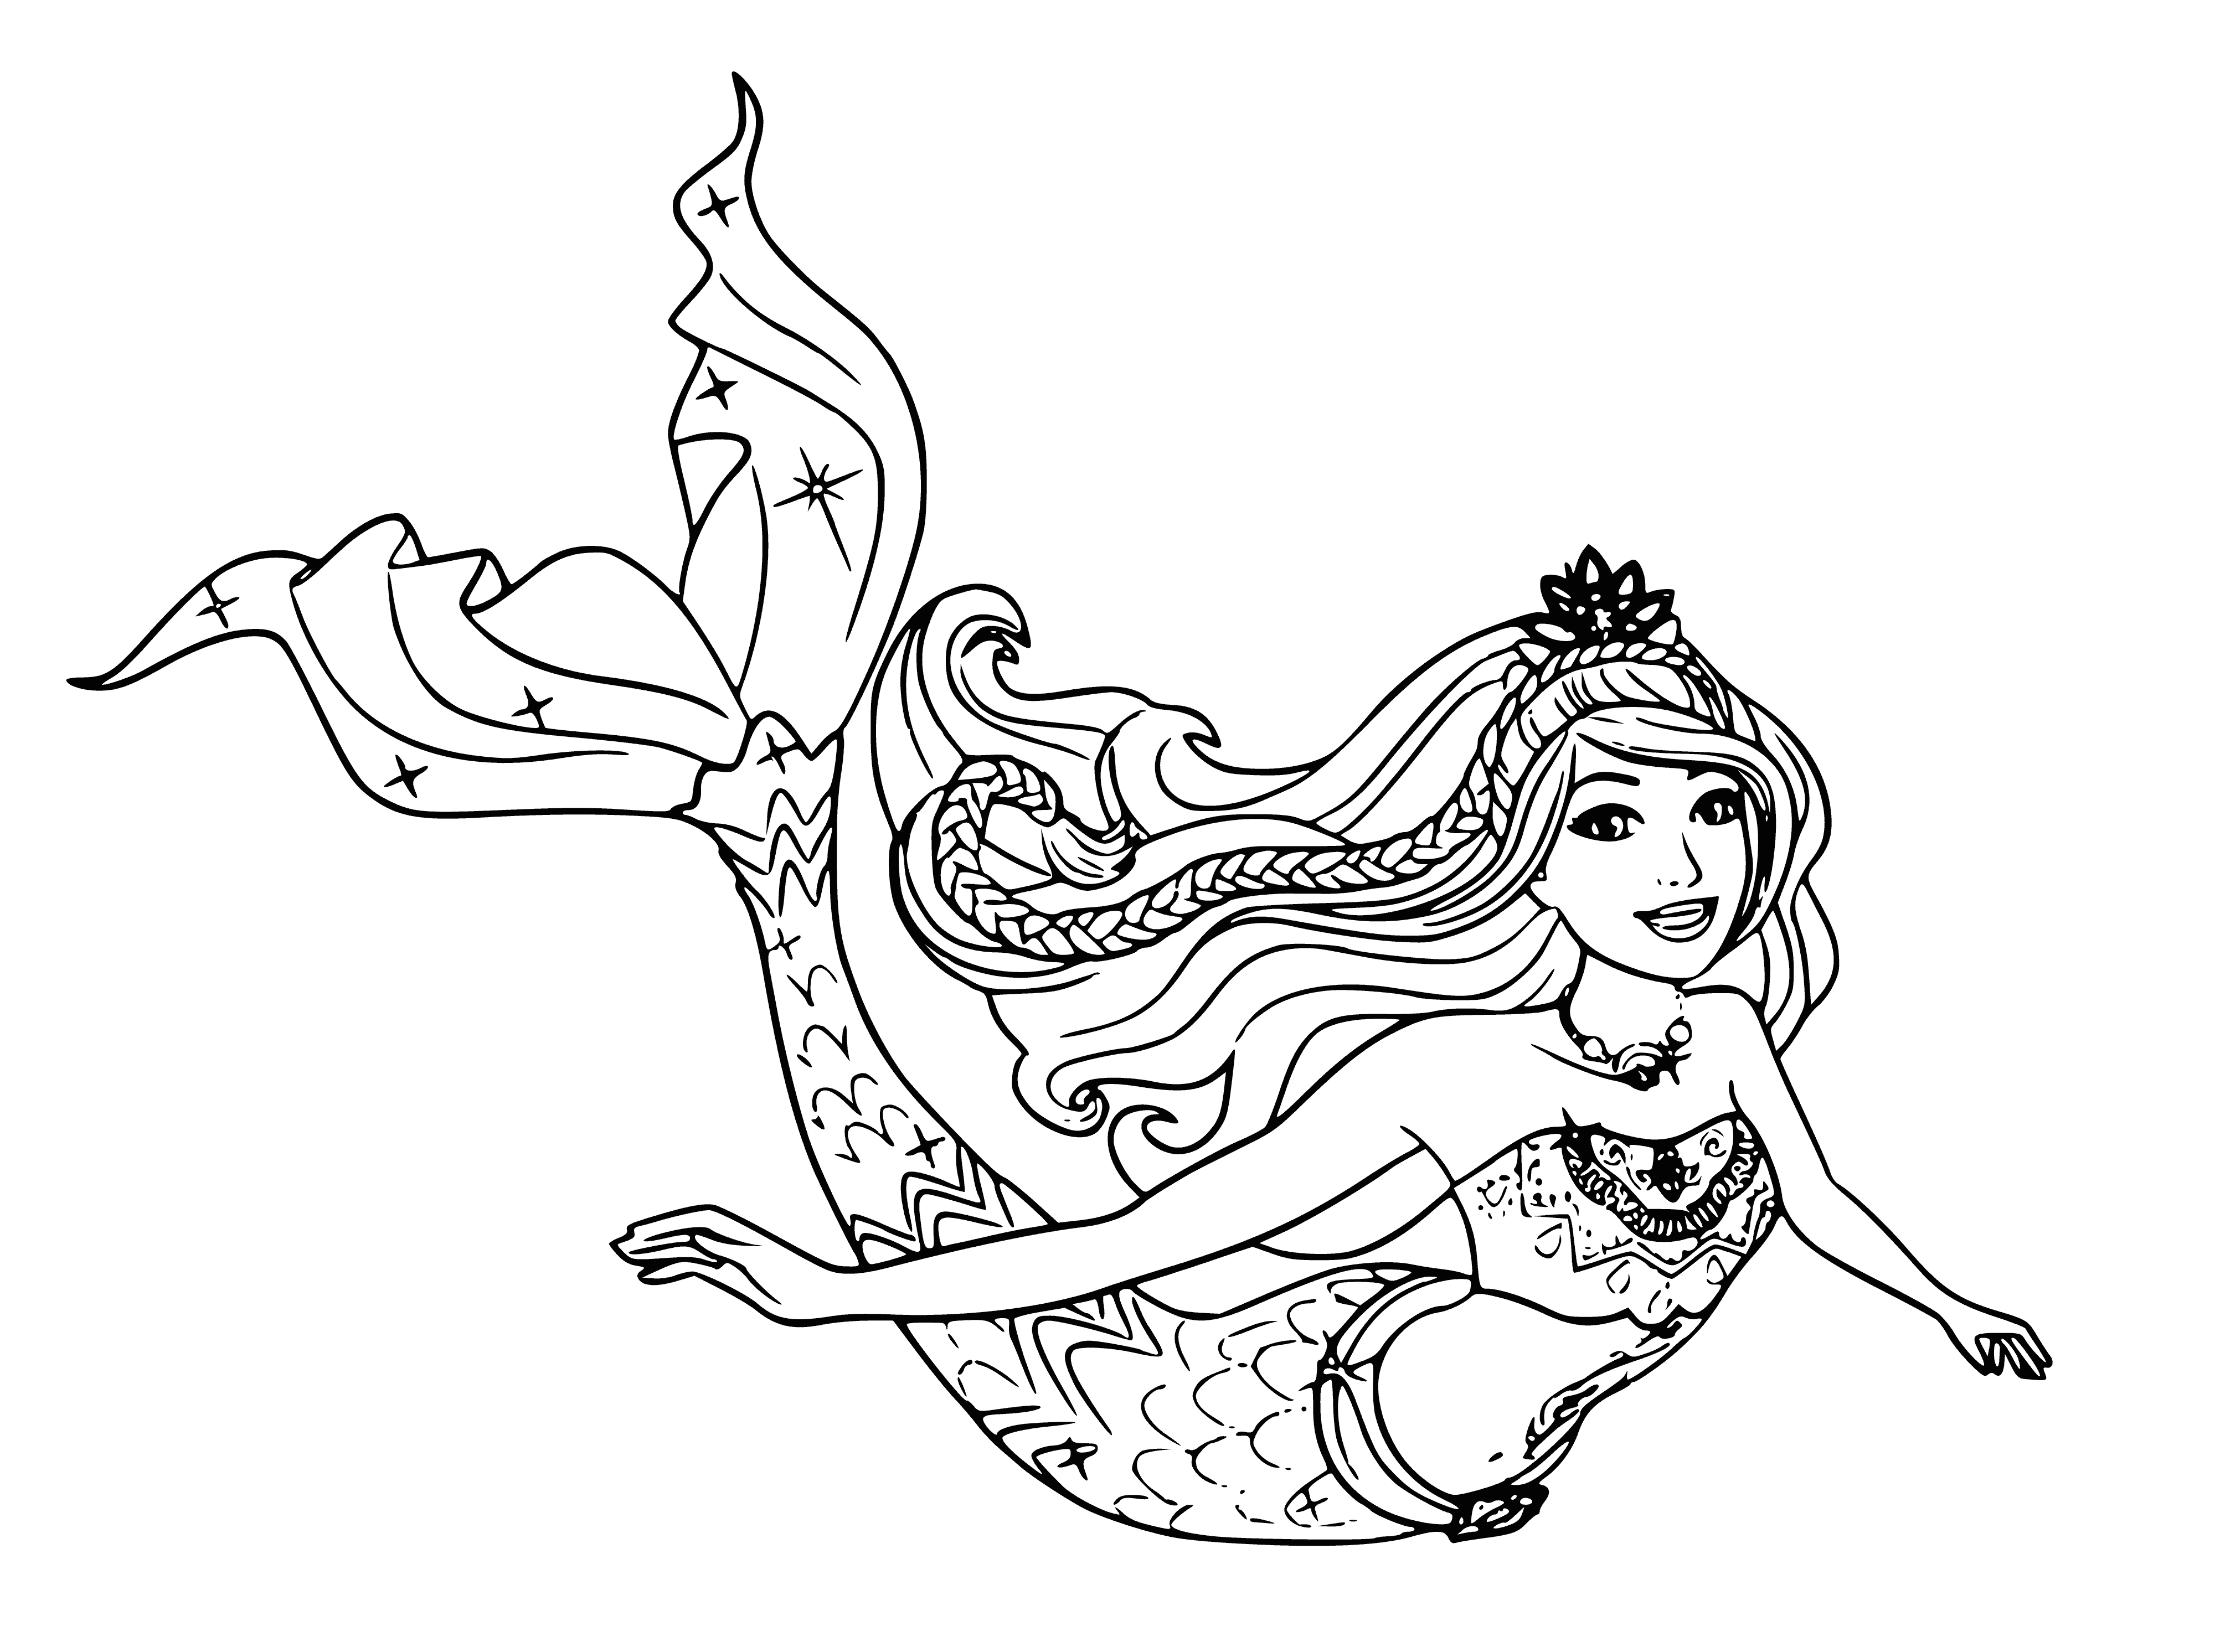 Mermaid princess coloring page